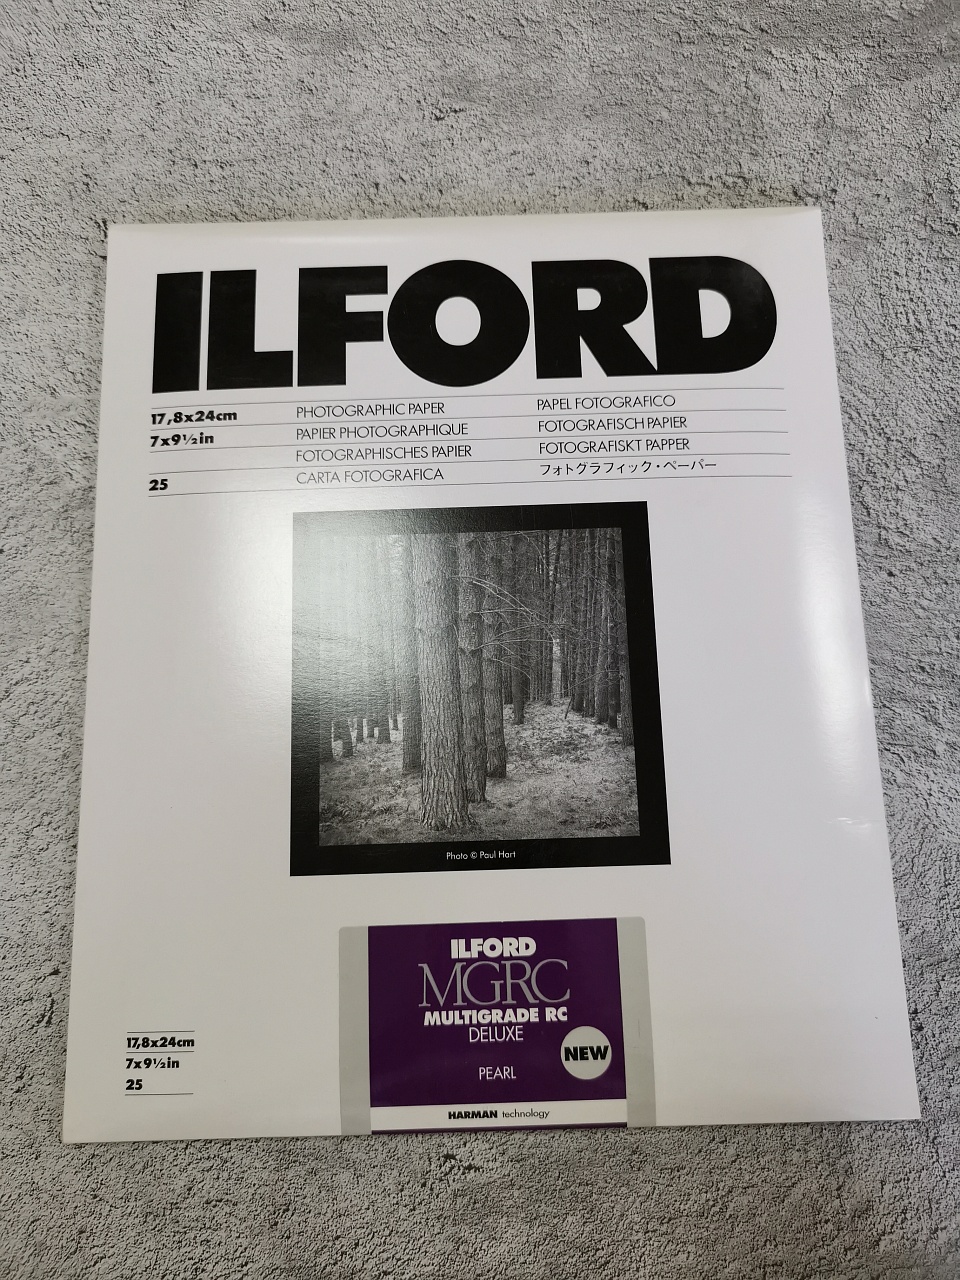 Ilford MULTIGRADE RC Deluxe Pearl 25 листов (17.8 x 24 cm) фото №1